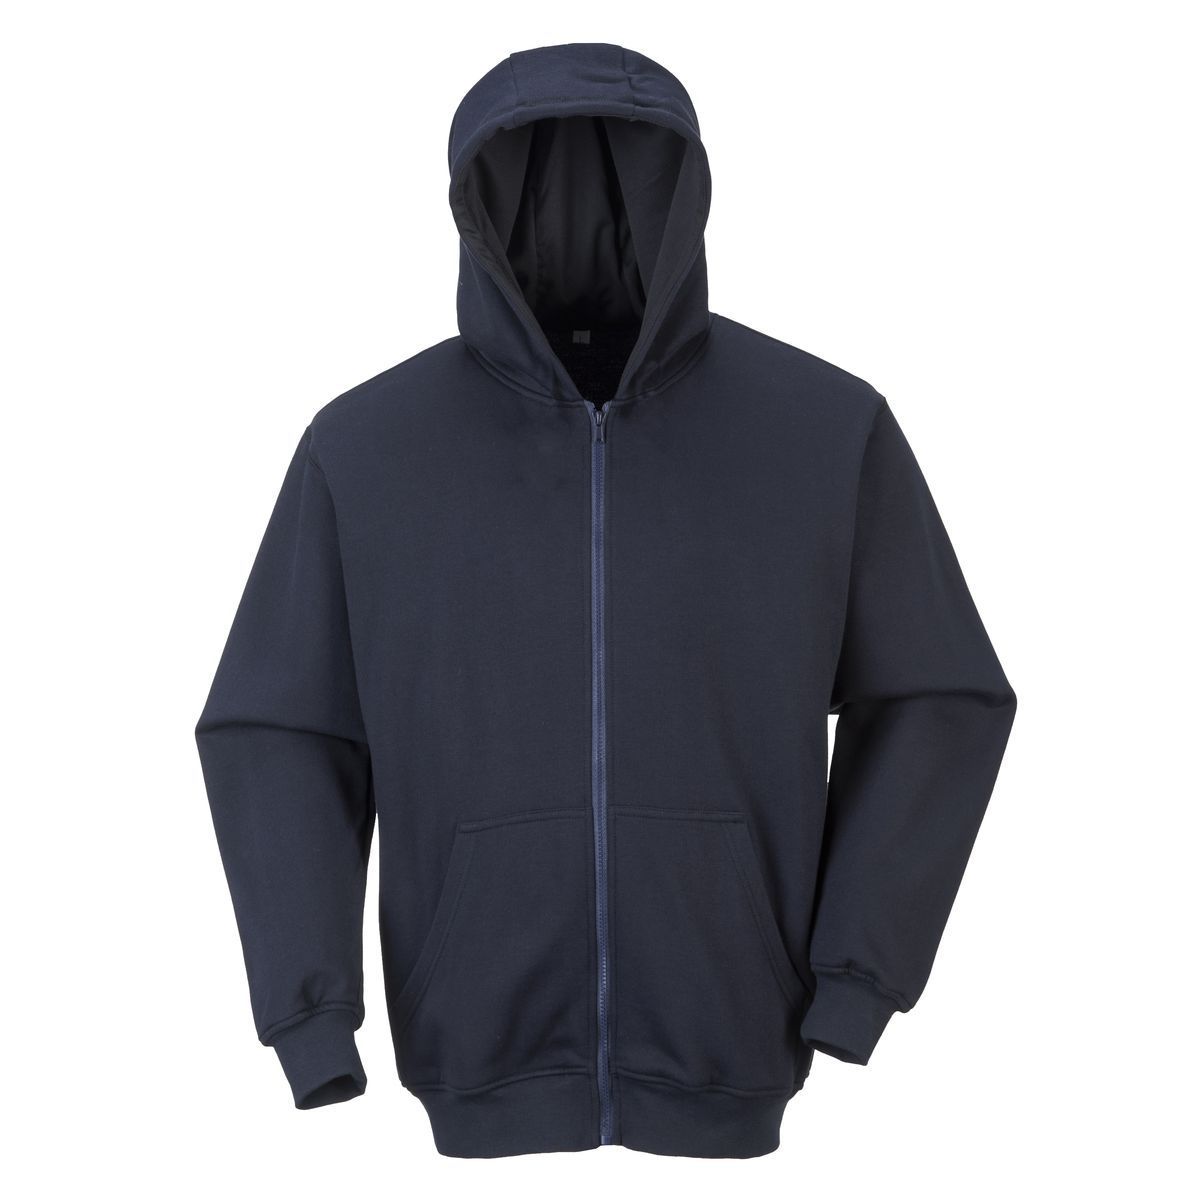 Style UFR81 FR Hooded Zip Sweatshirt-1